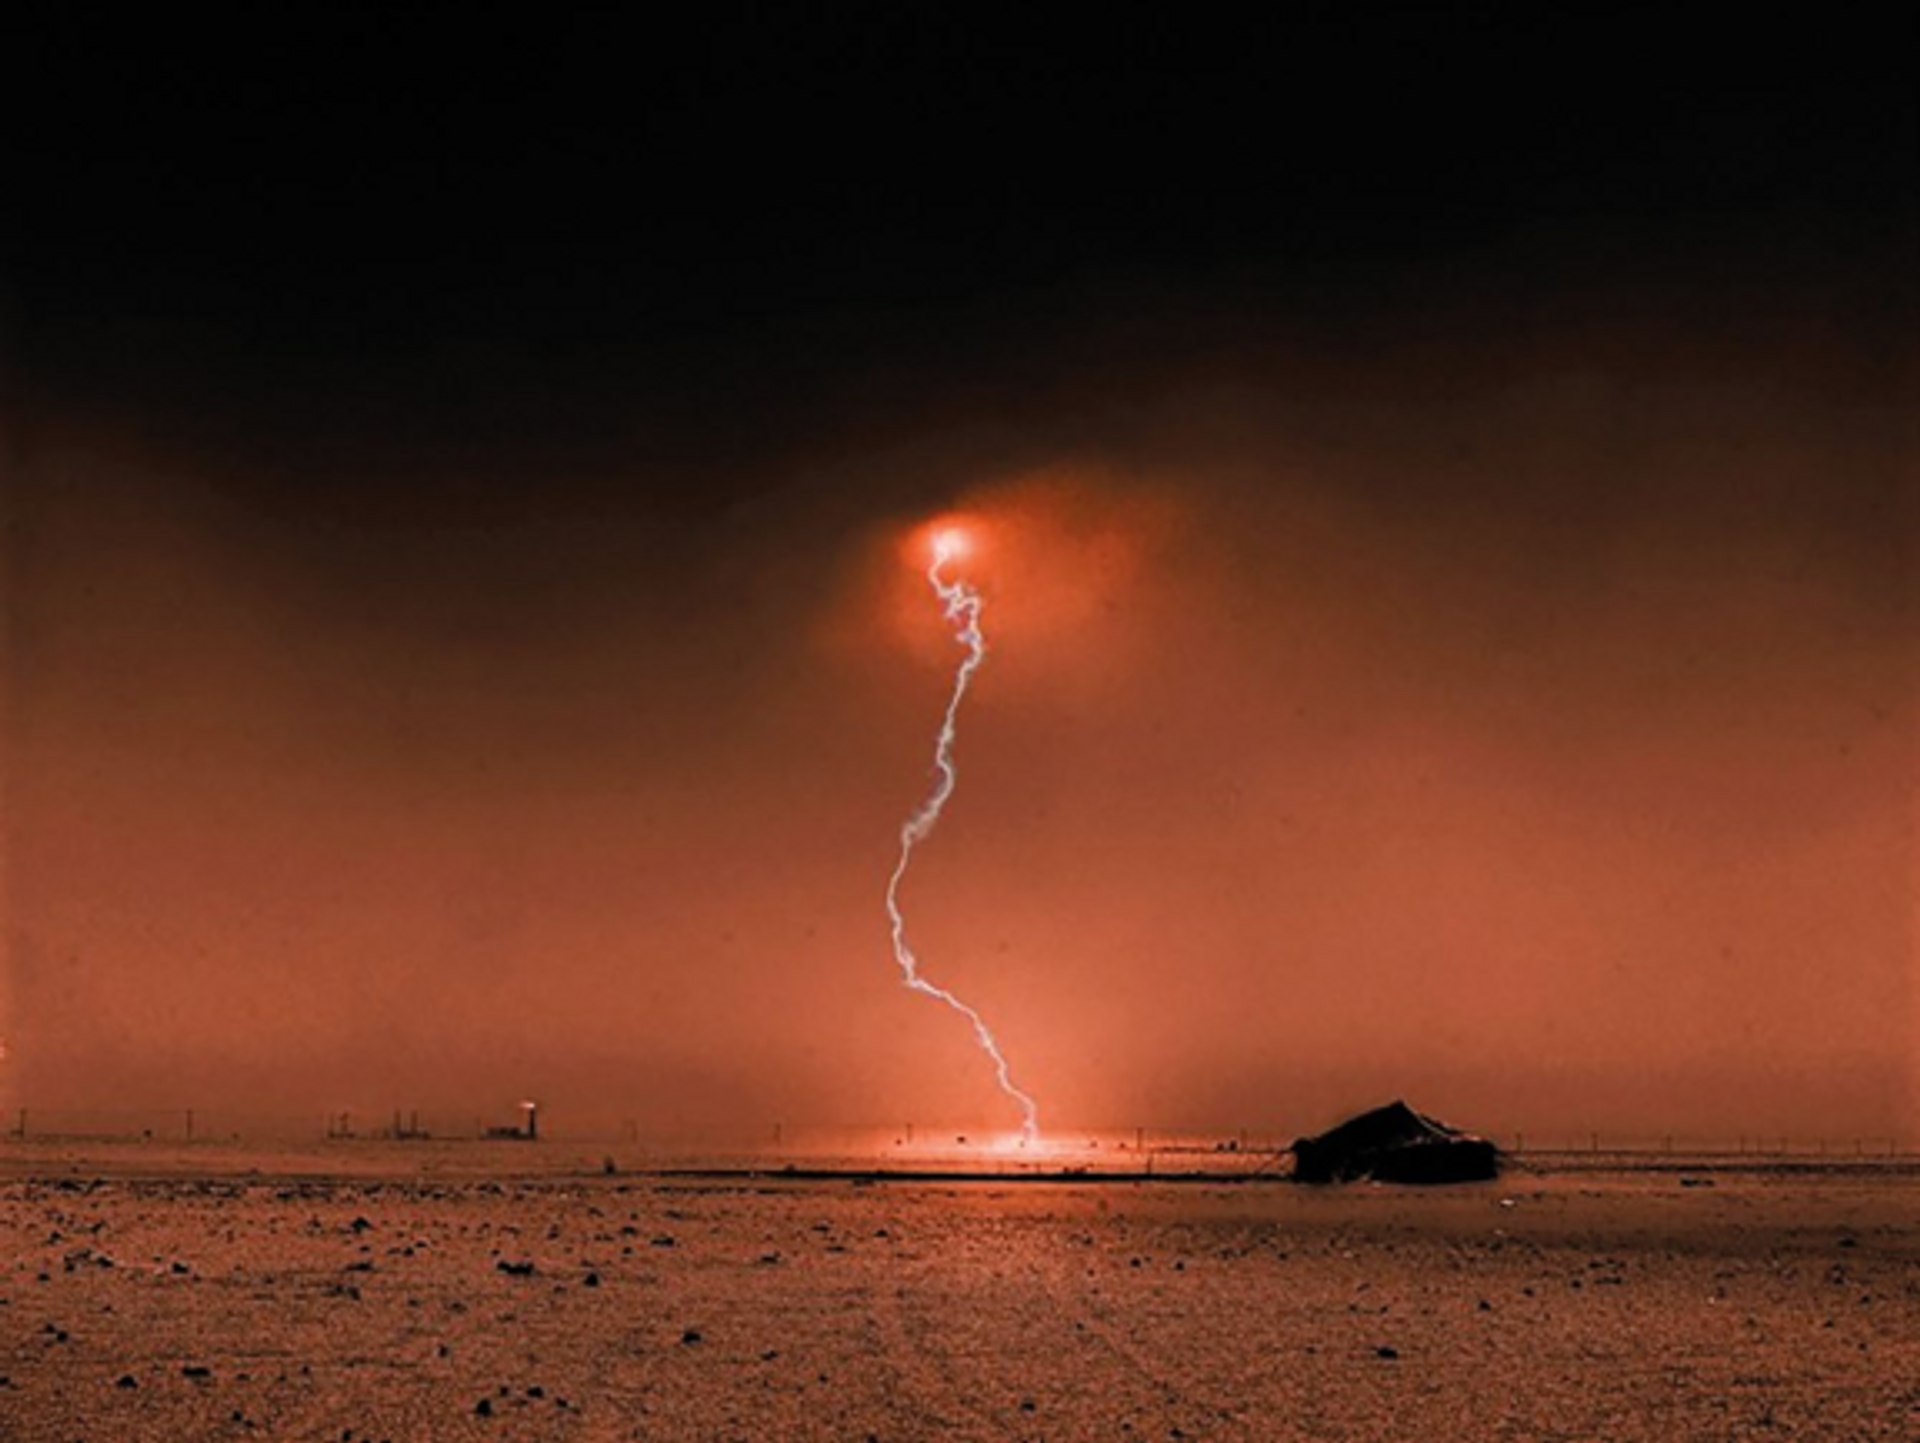 Ahmed Mater, Lightning Land, 2017, photographie, tirage LightJet. Courtesy de l’artiste et Galleria Continua.